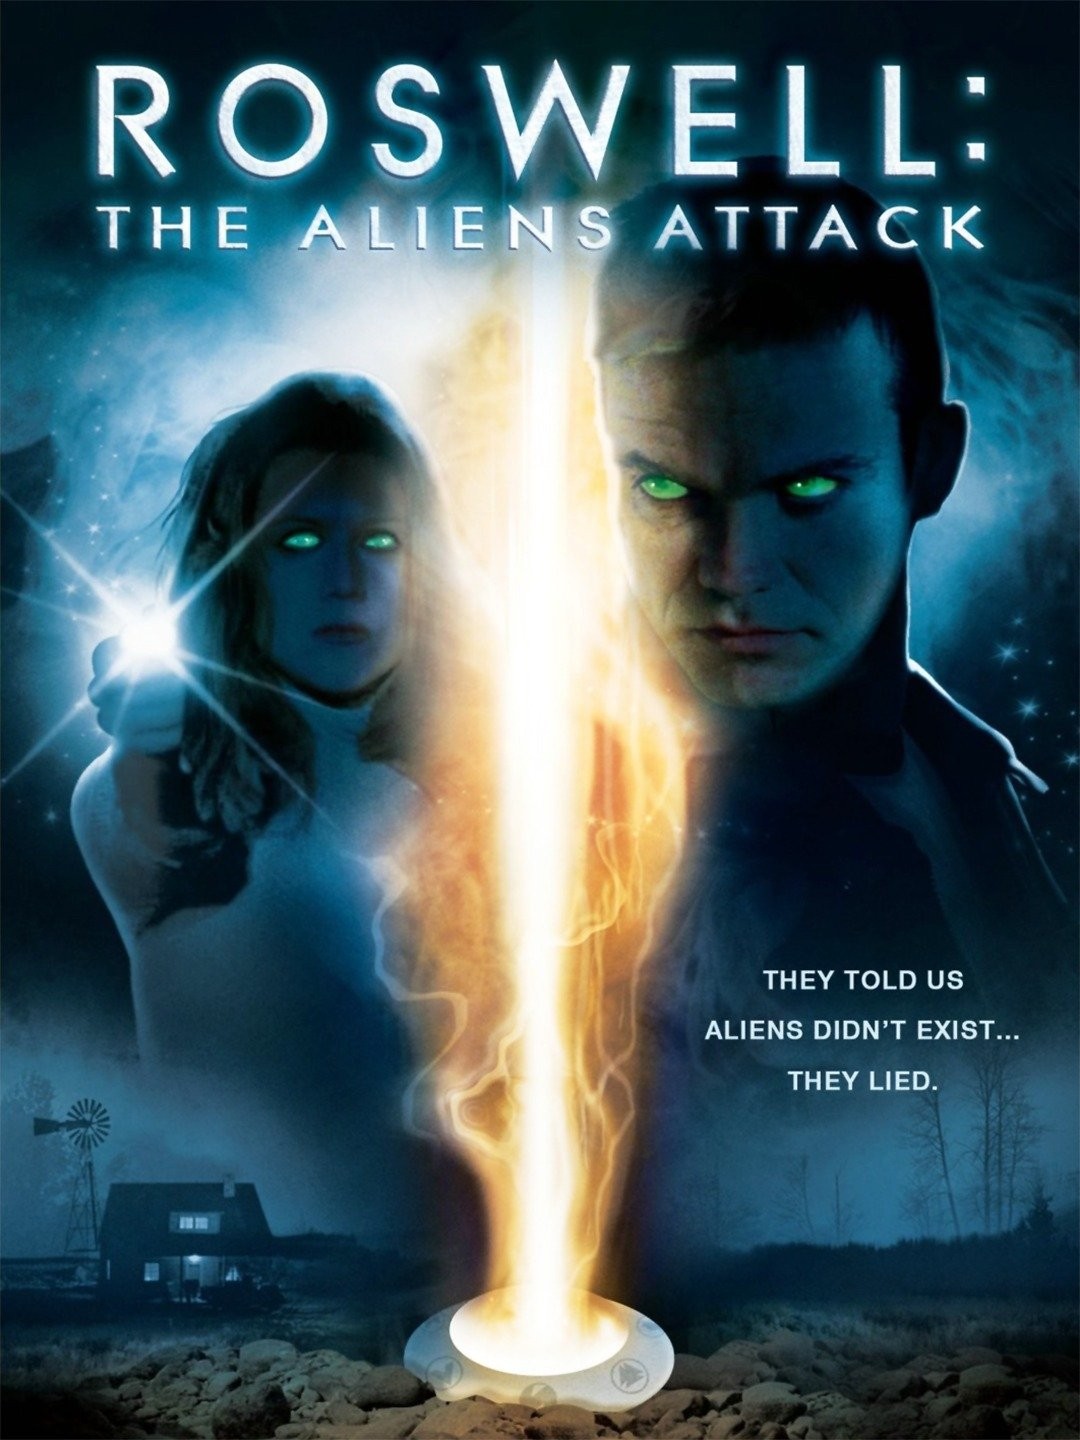 Alien Incursion - Rotten Tomatoes